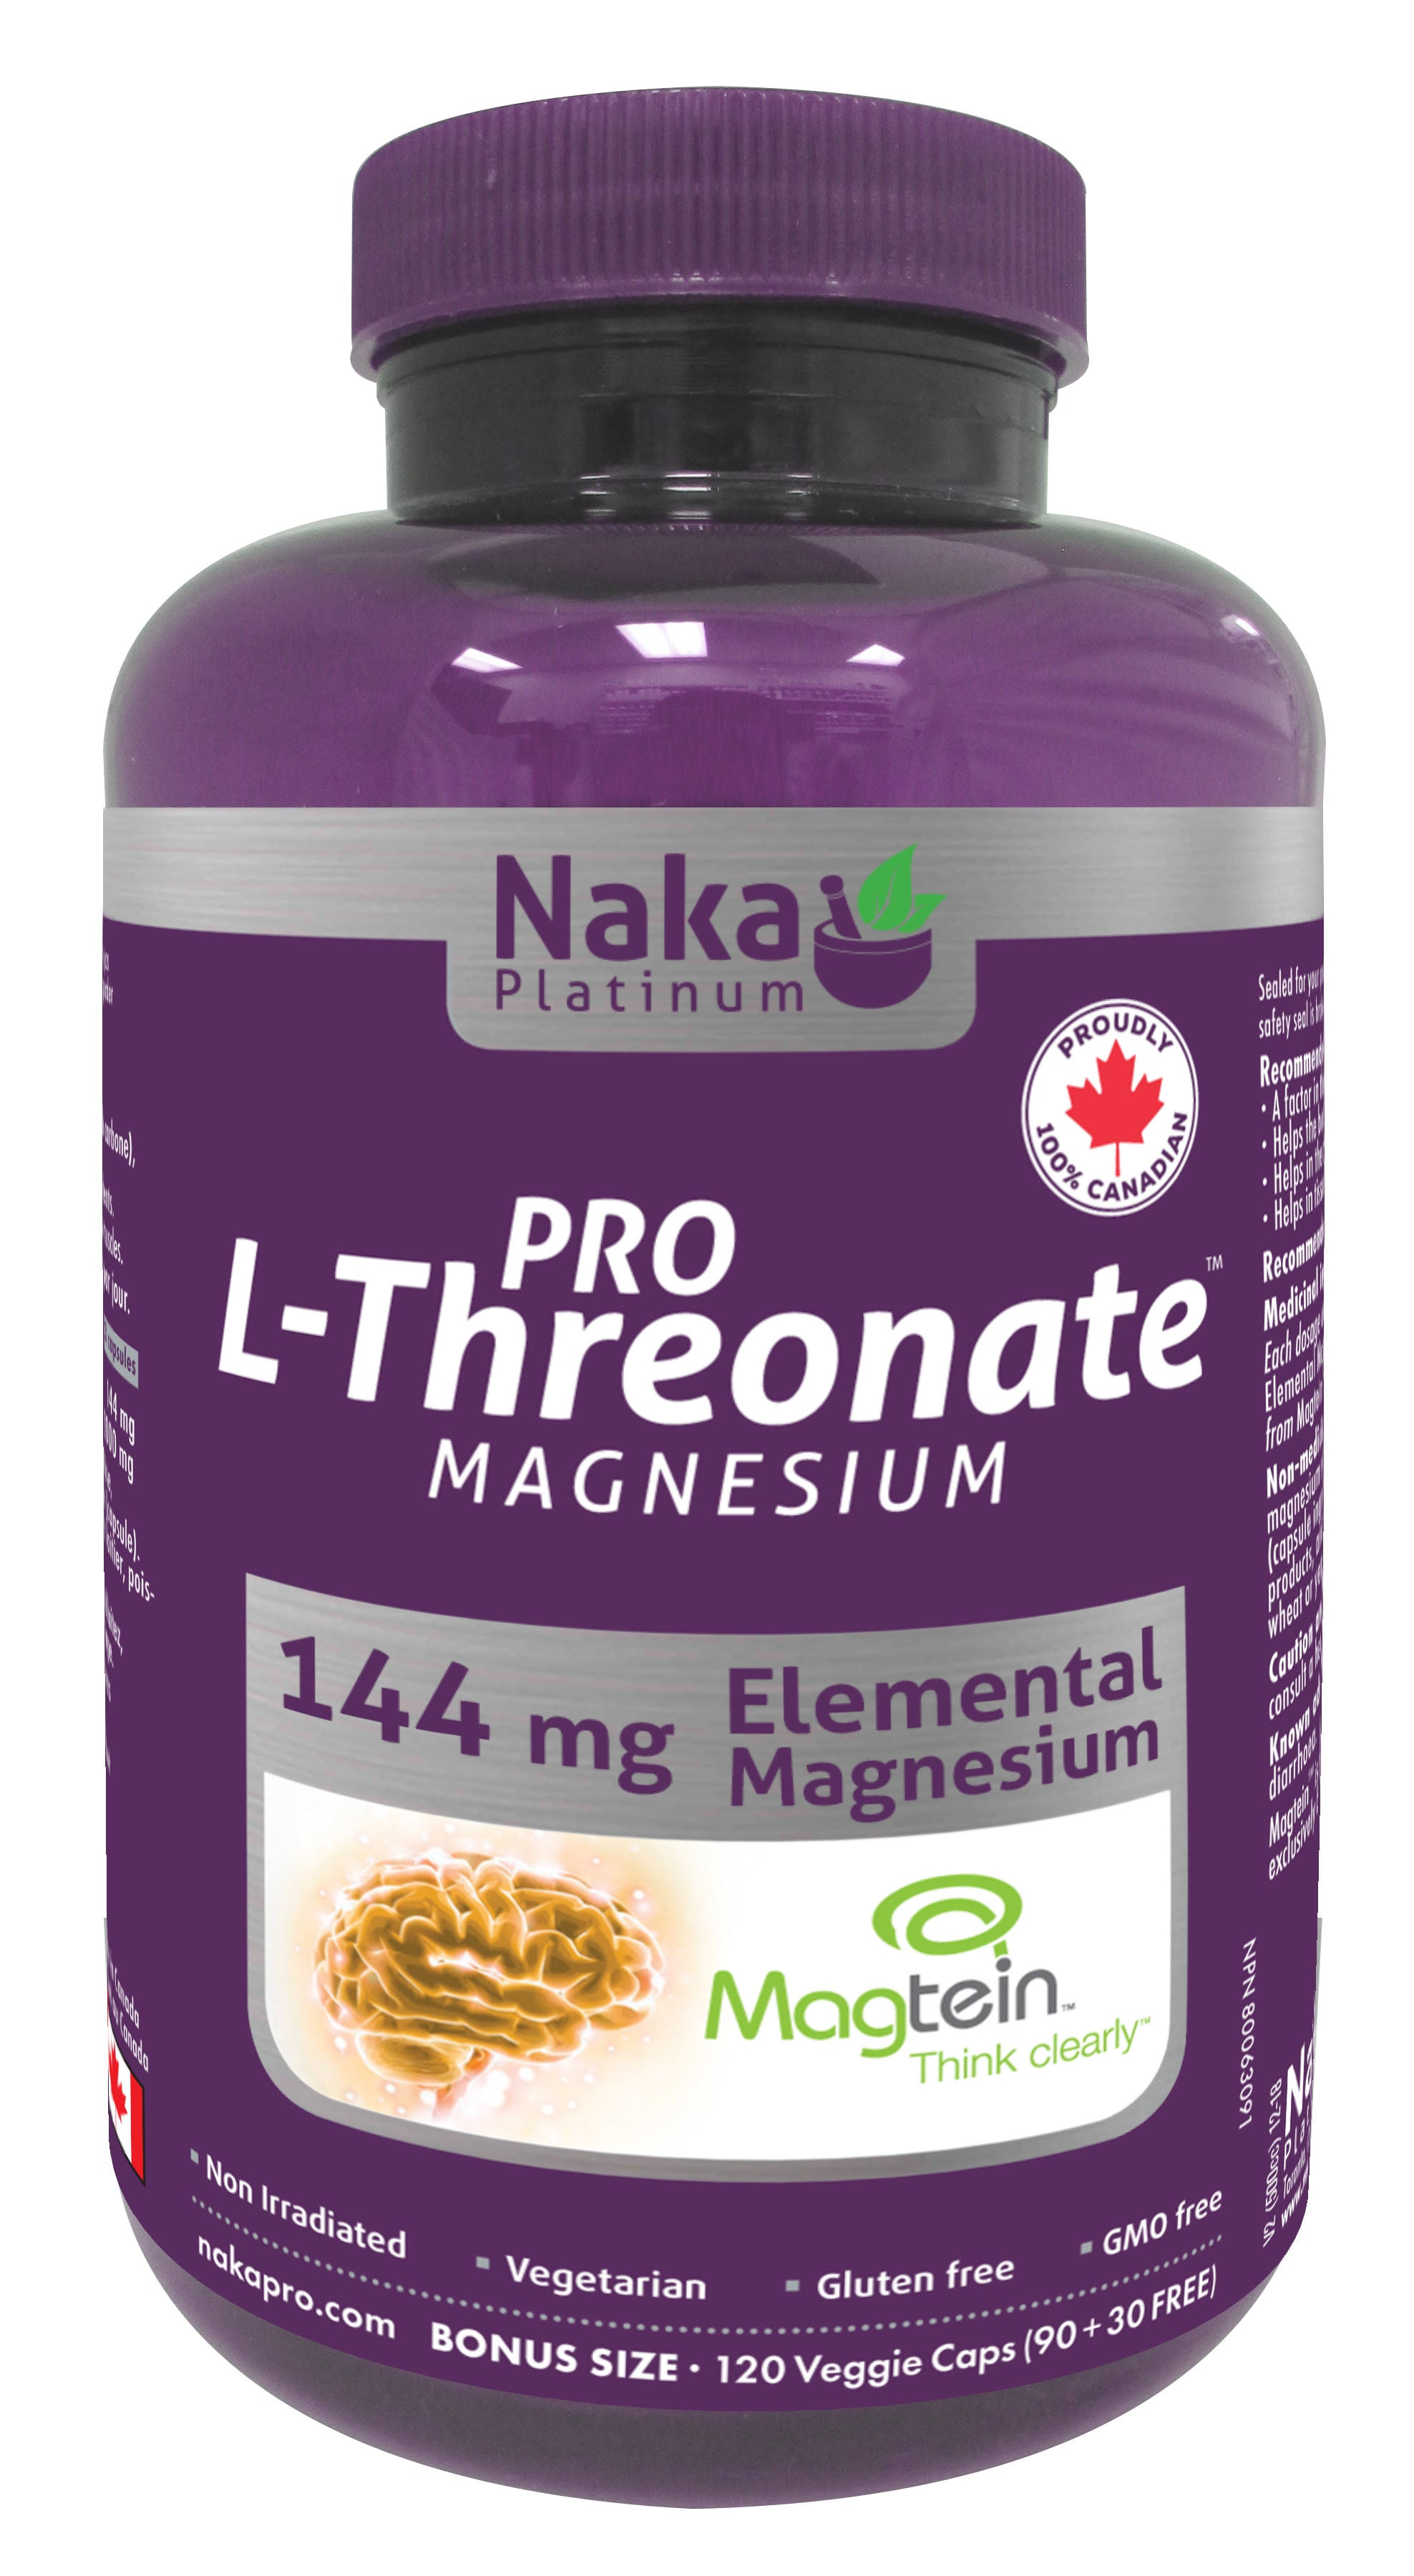 Naka Platinum Pro L-Threonate Magnesium 144mg 120 Veggie Caps